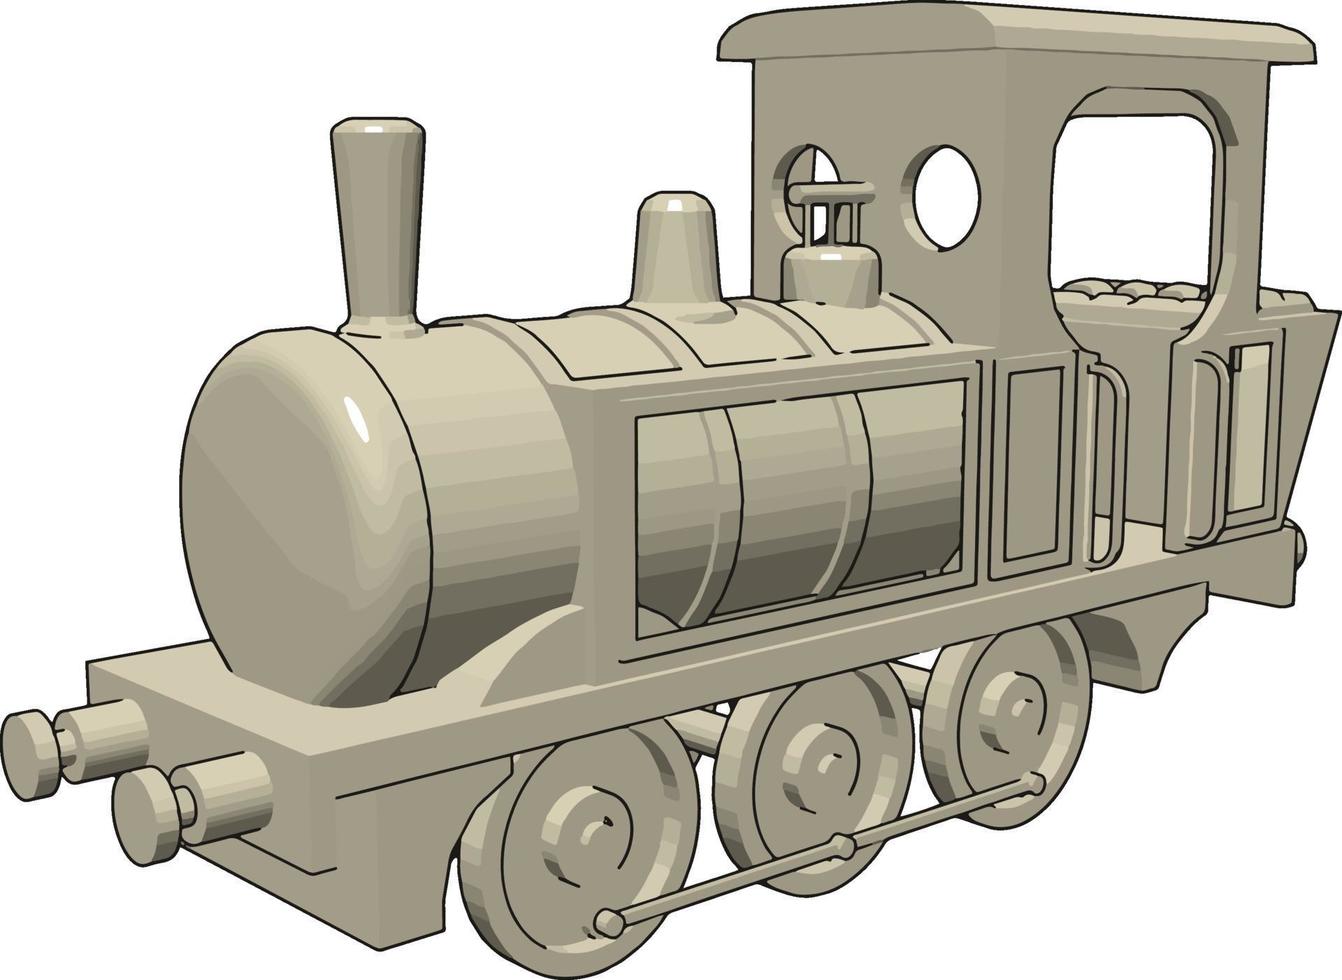 Locomotive, illustration, vector on white background.